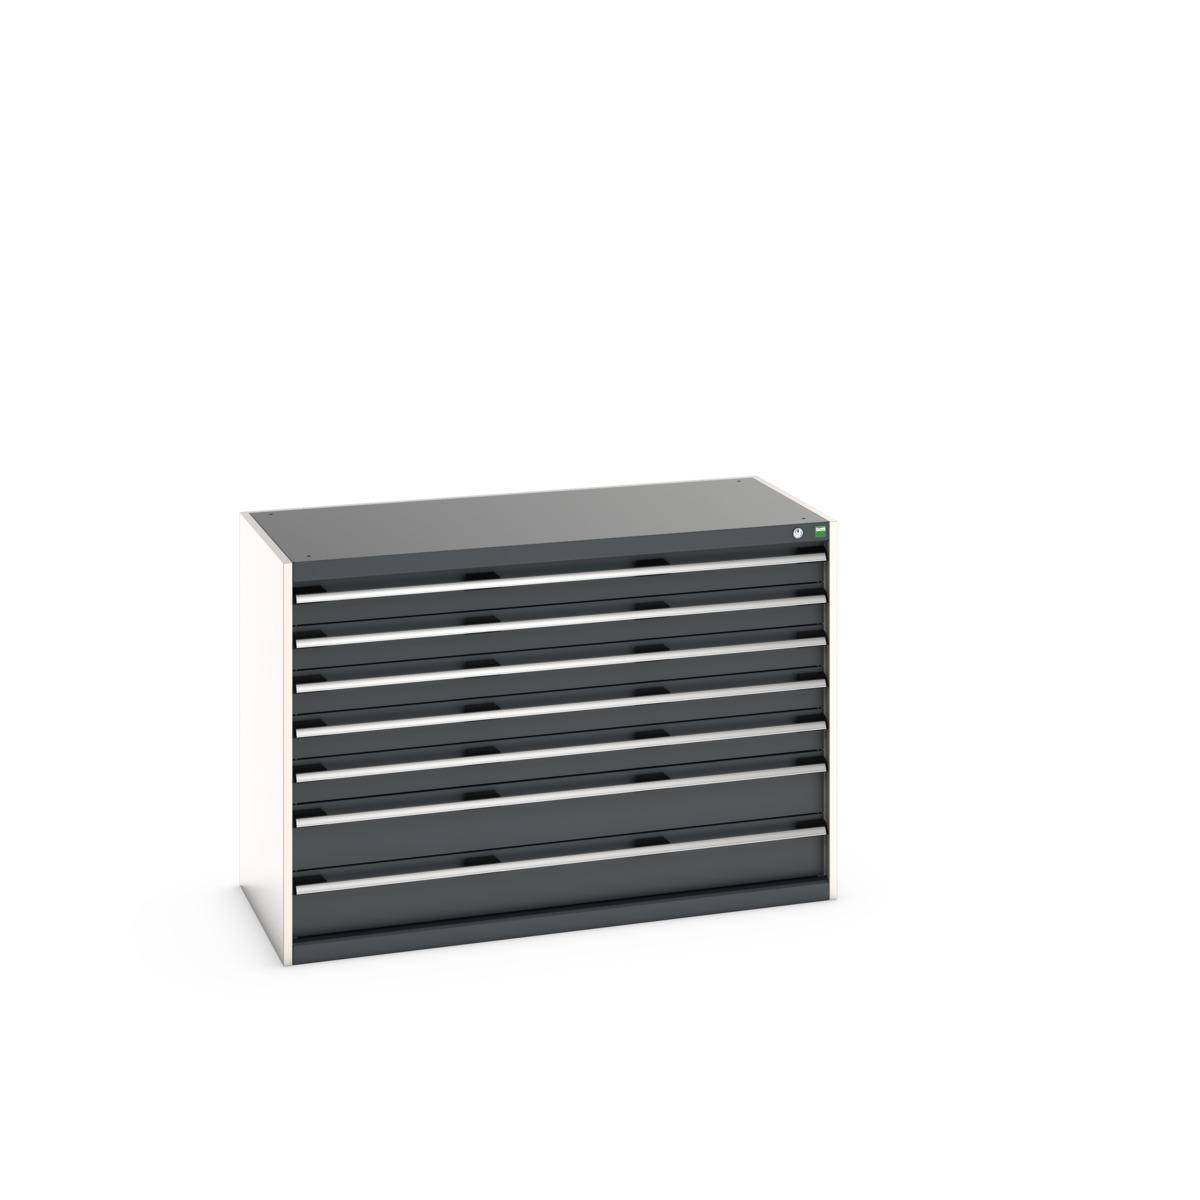 40022117. - cubio drawer cabinet